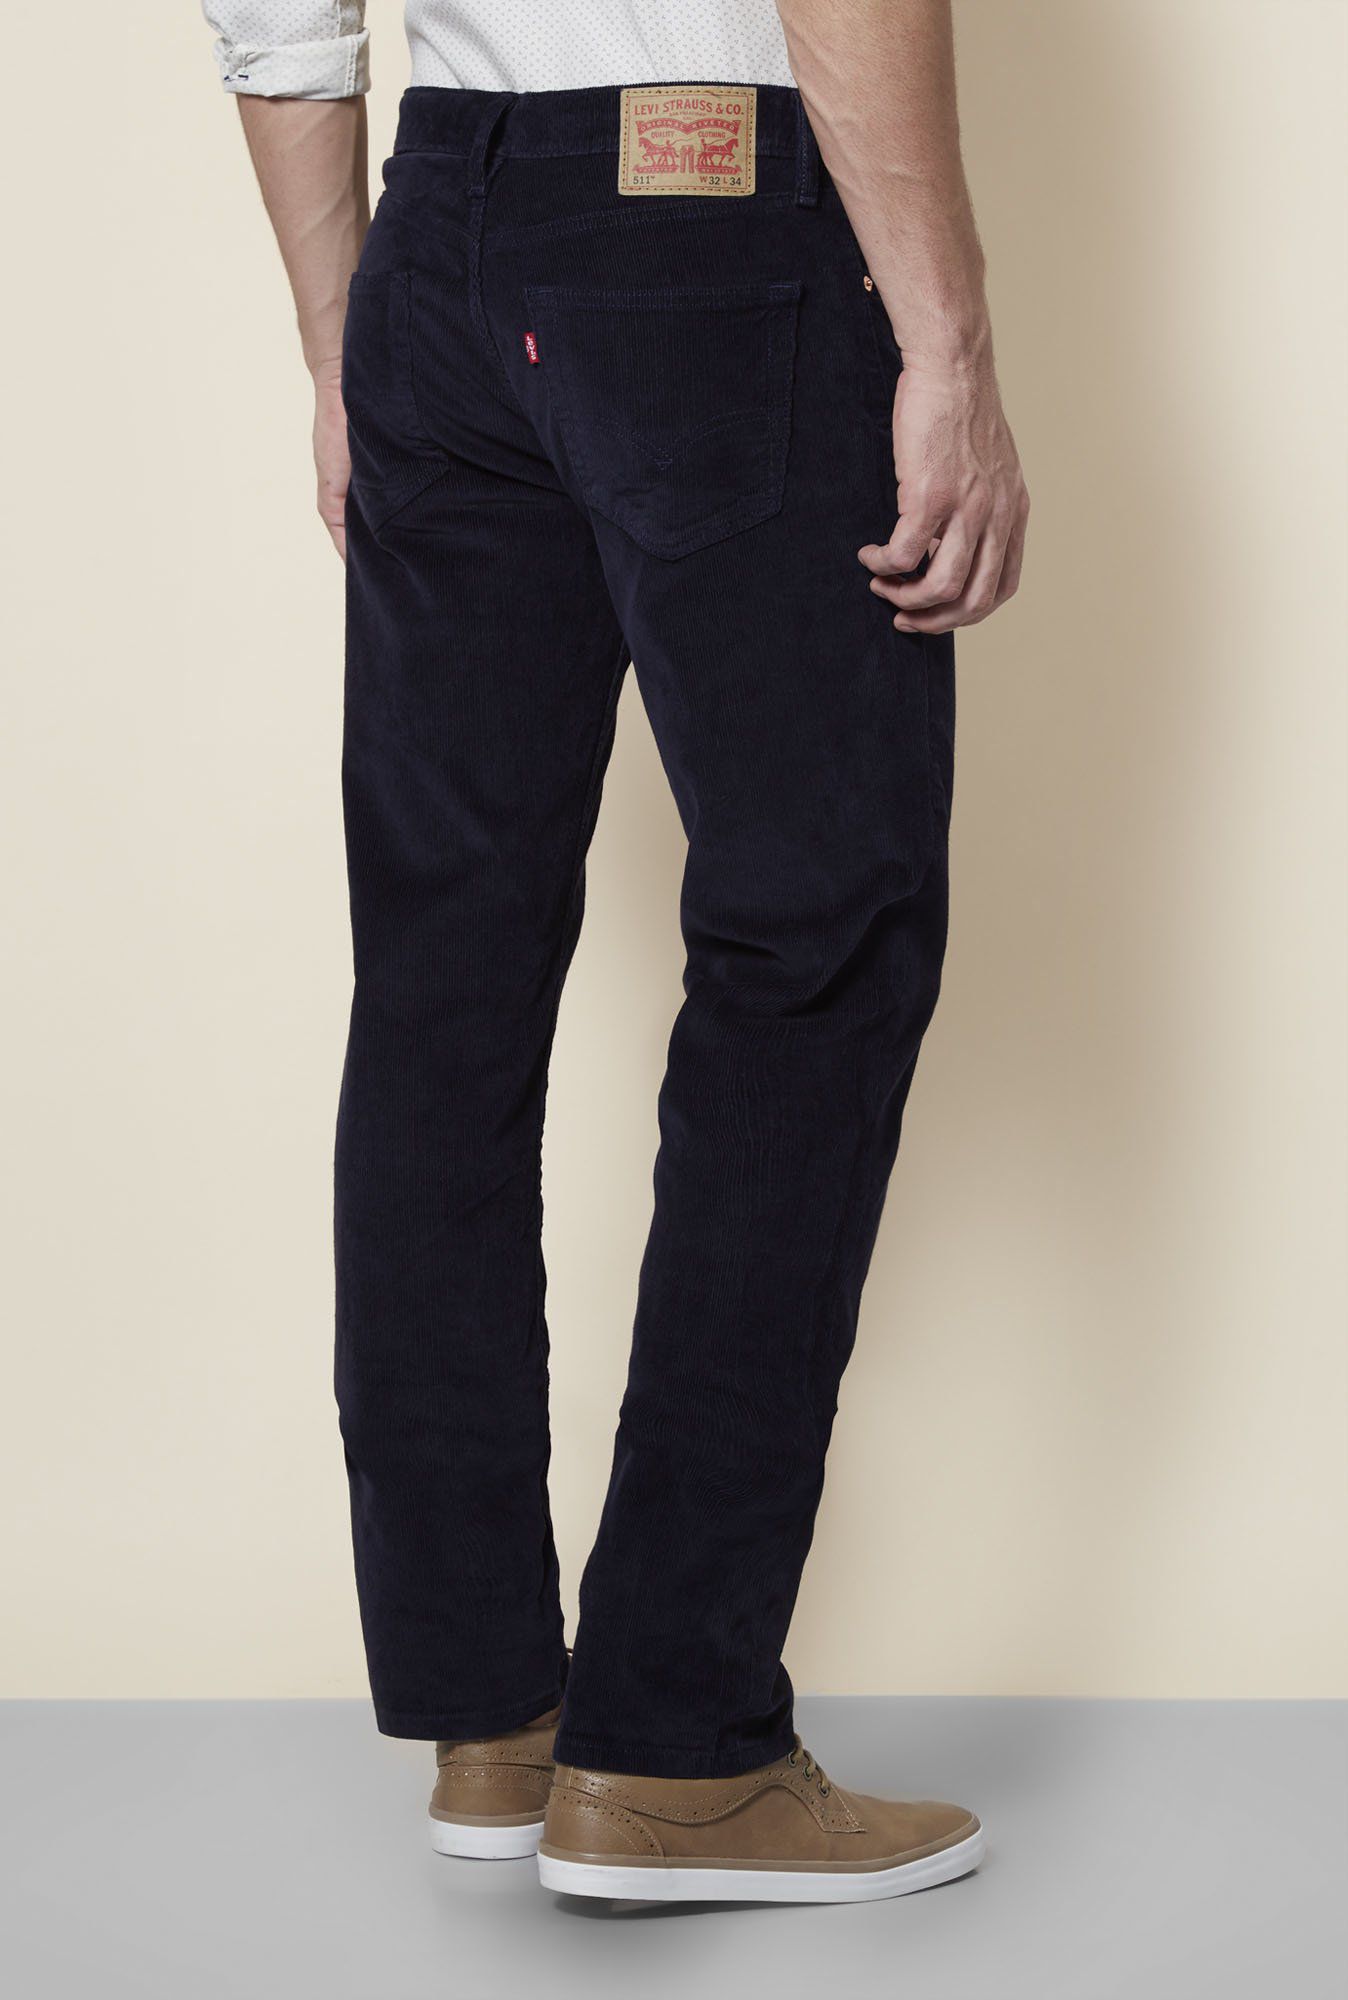 Levi's Black Regular Fit Jeans - Buy Levi's Black Regular Fit Jeans